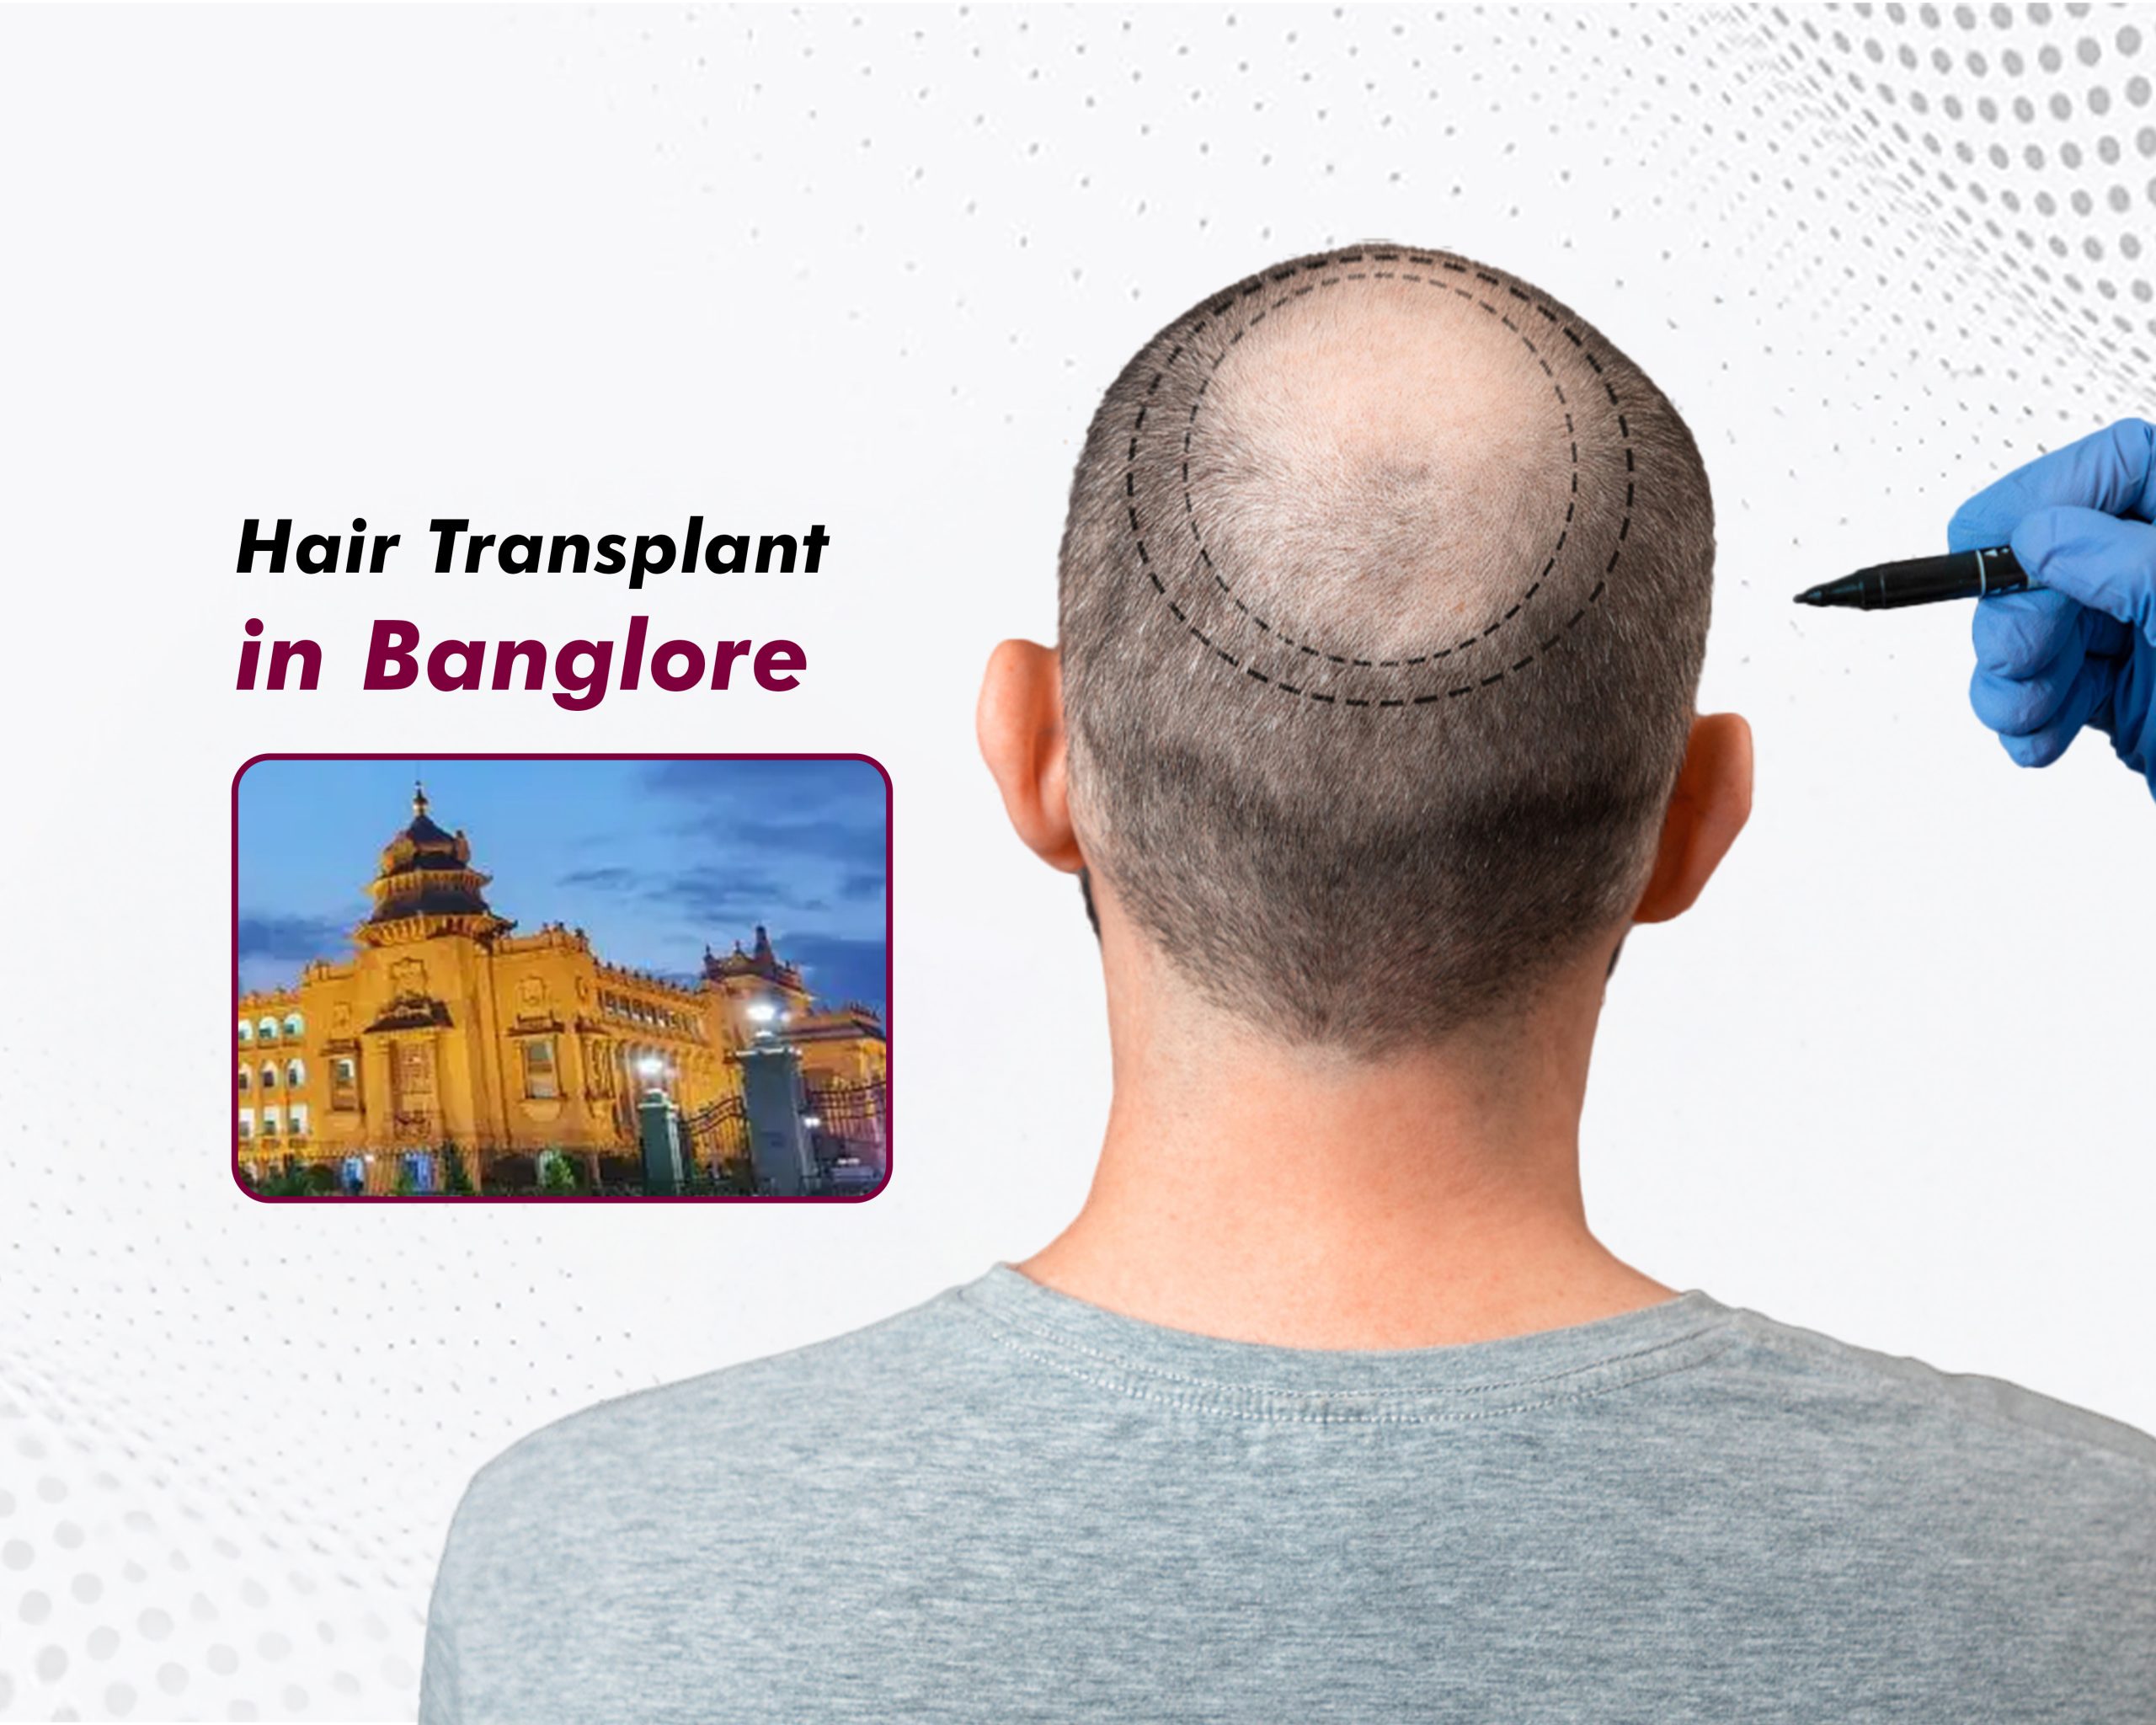 Hair Transplant in Bangalore